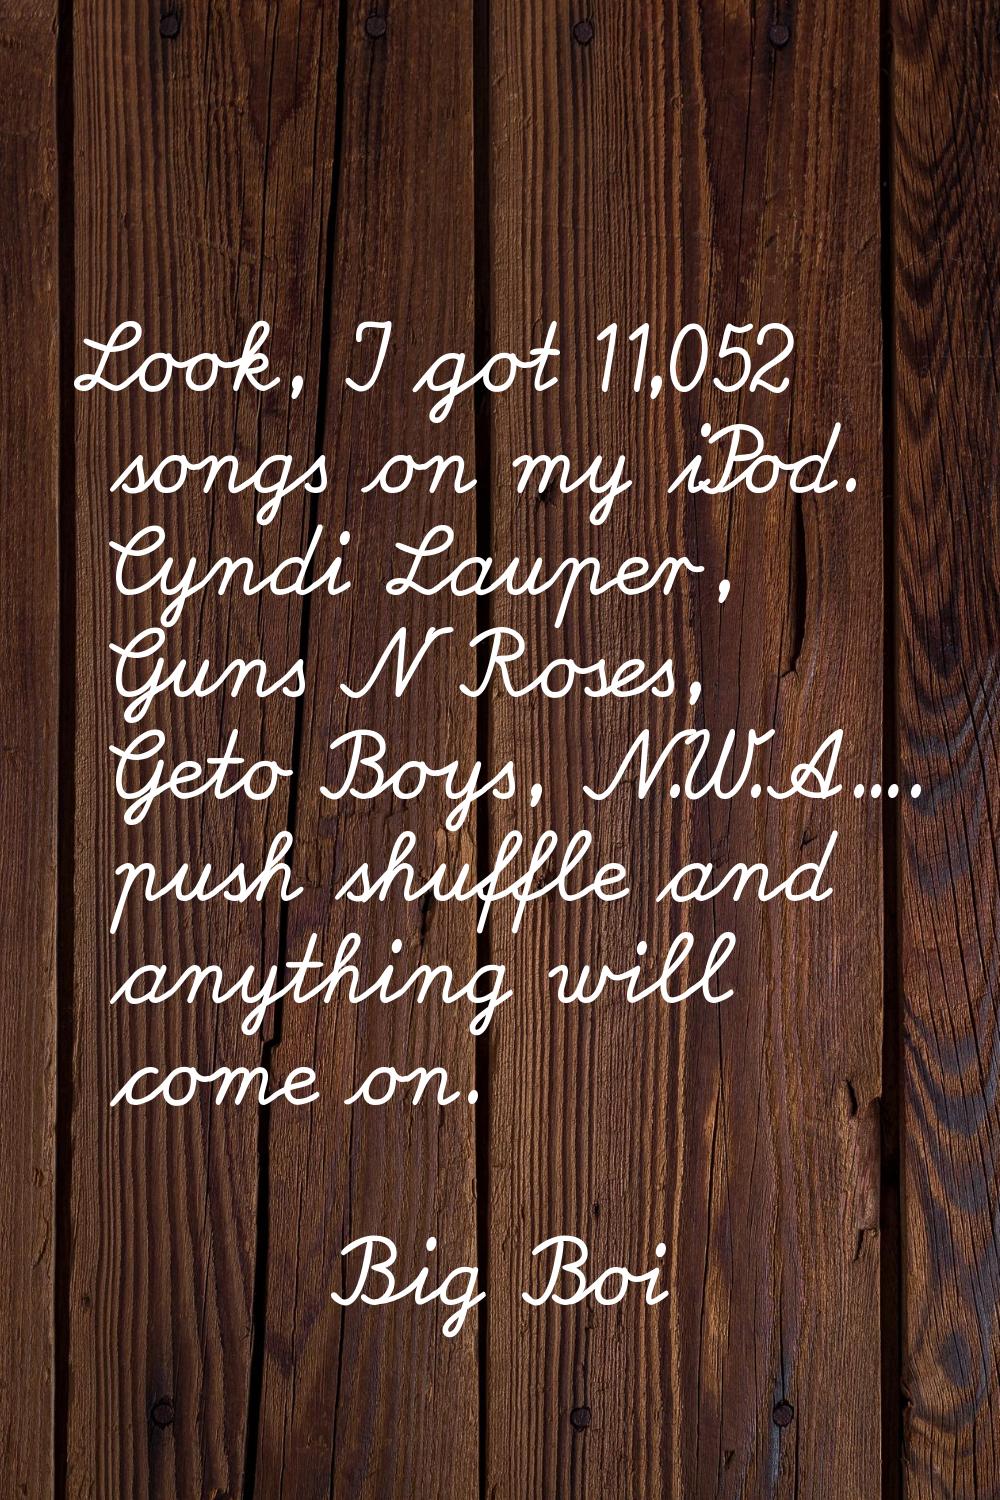 Look, I got 11,052 songs on my iPod. Cyndi Lauper, Guns N' Roses, Geto Boys, N.W.A.... push shuffle